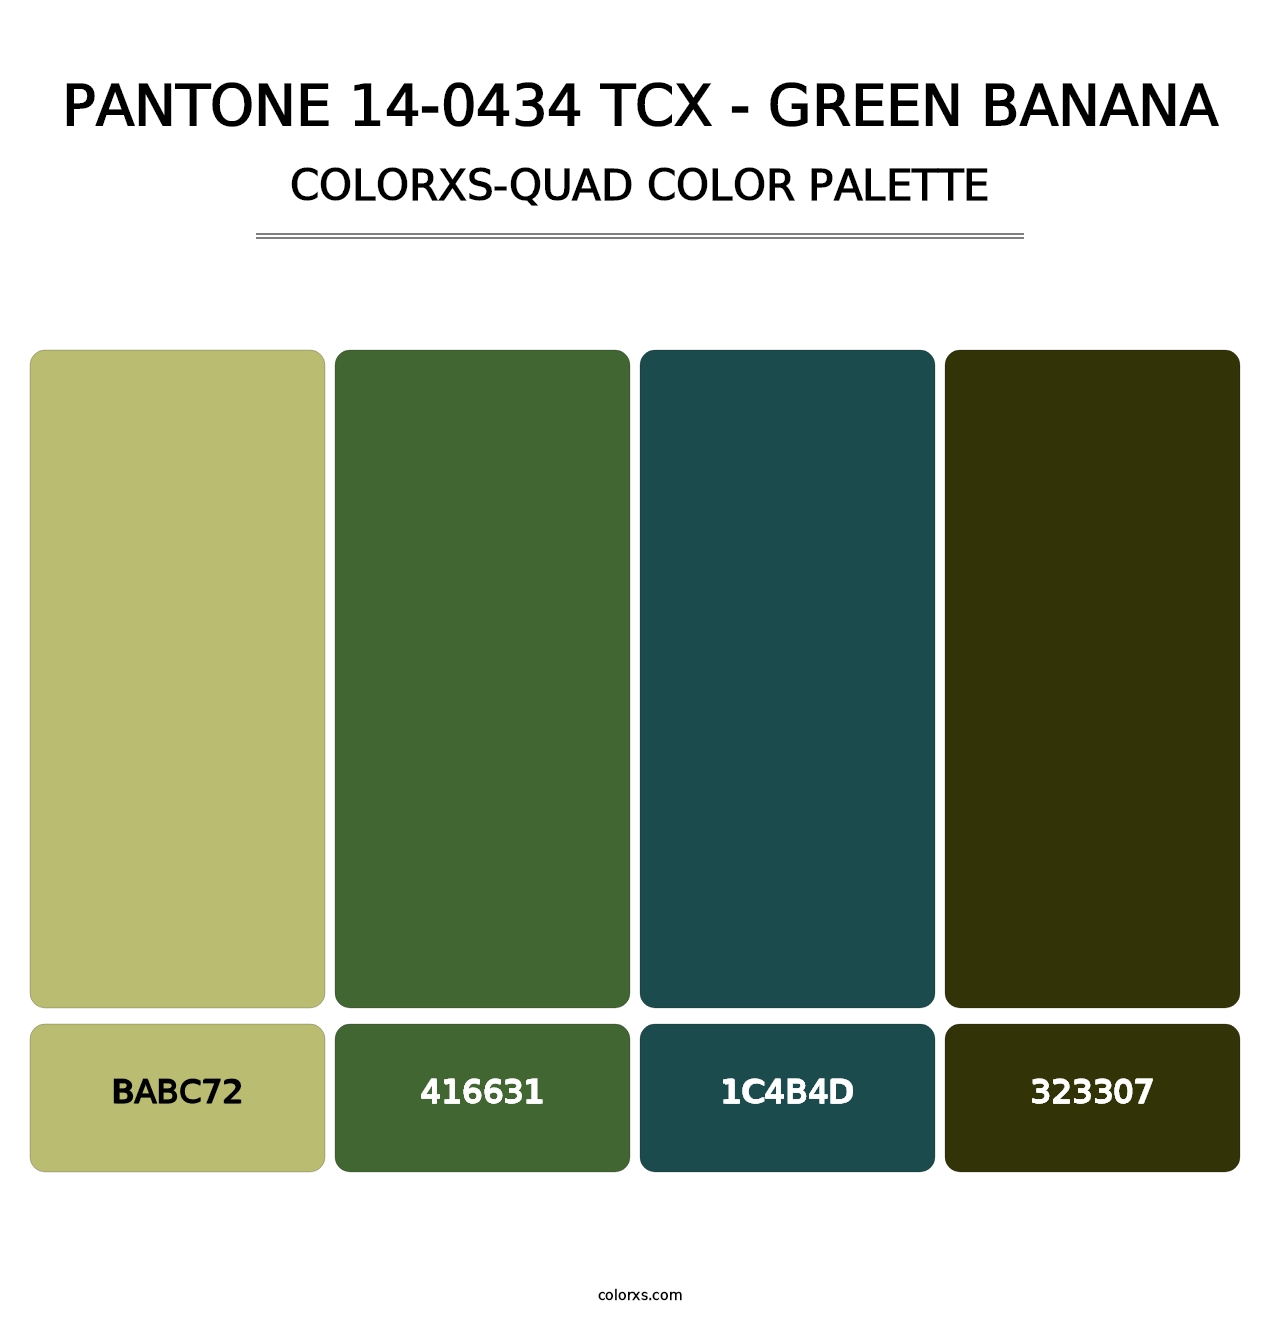 PANTONE 14-0434 TCX - Green Banana - Colorxs Quad Palette